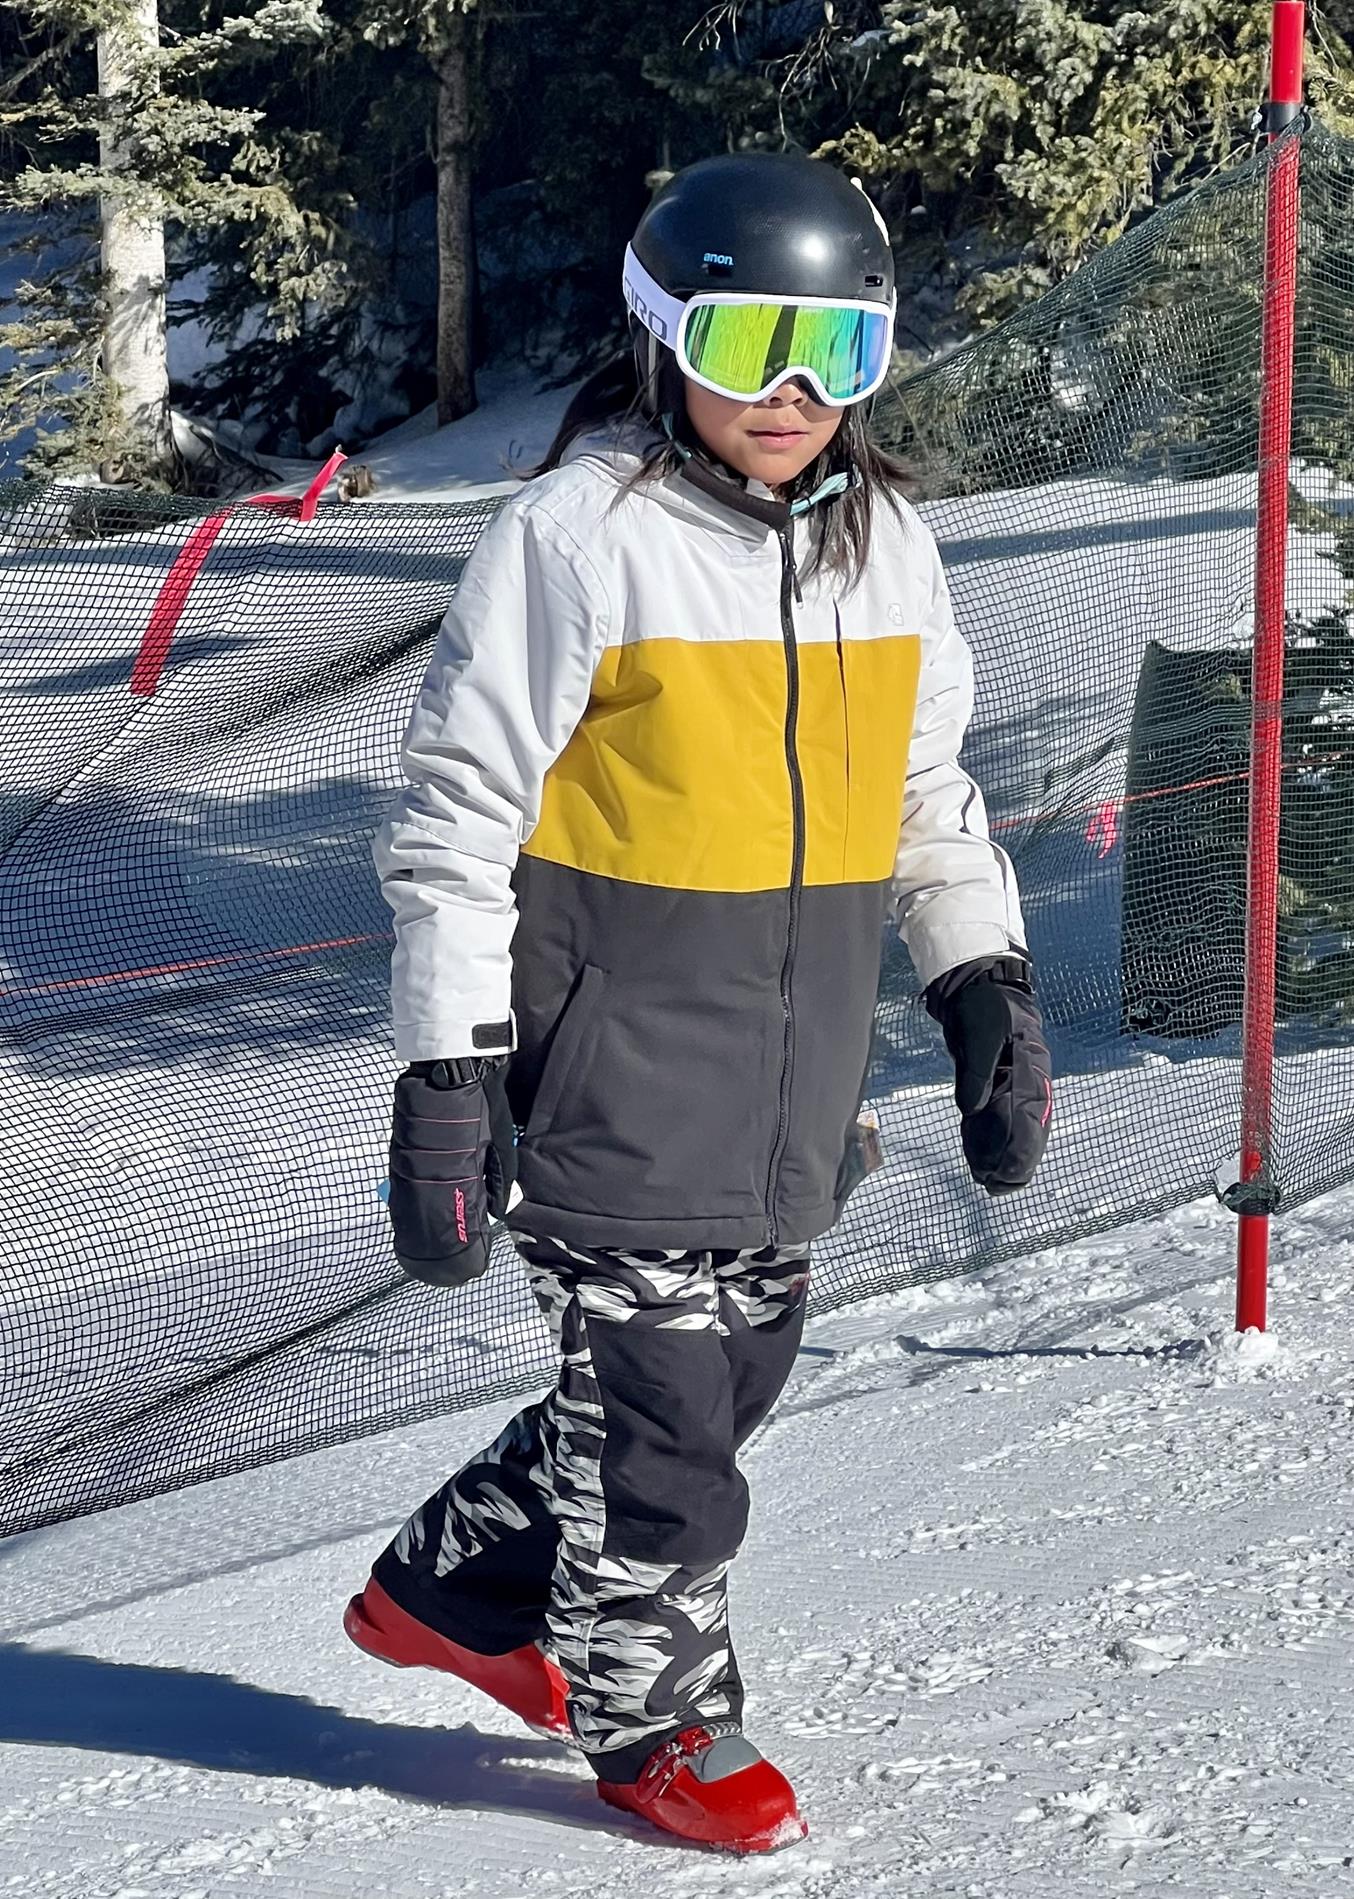 Skiing Program